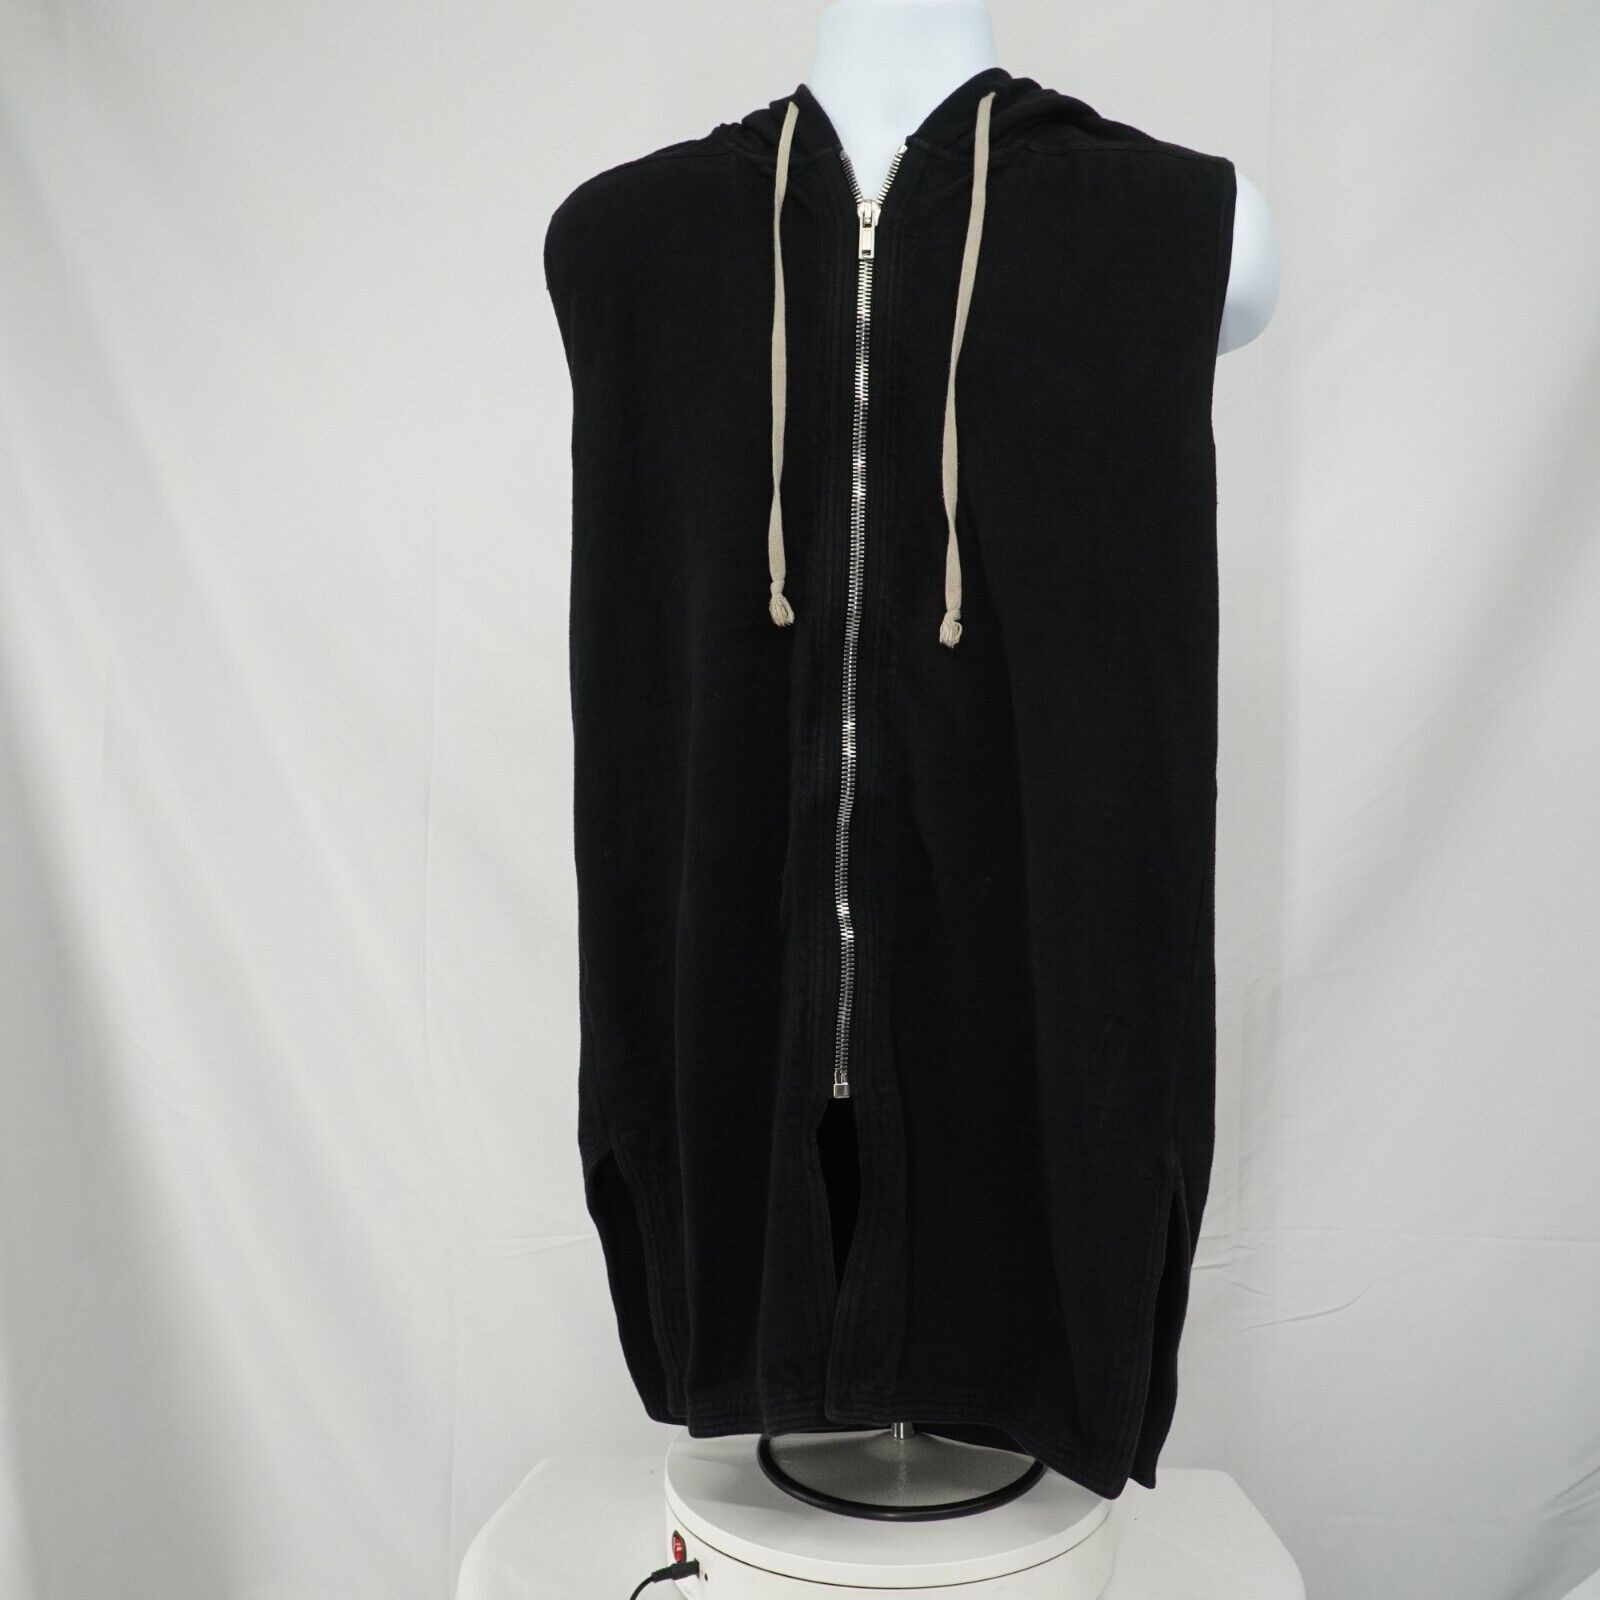 Black Zip Up Sleeveless Jacket Hoodie Cotton - Medium - 8